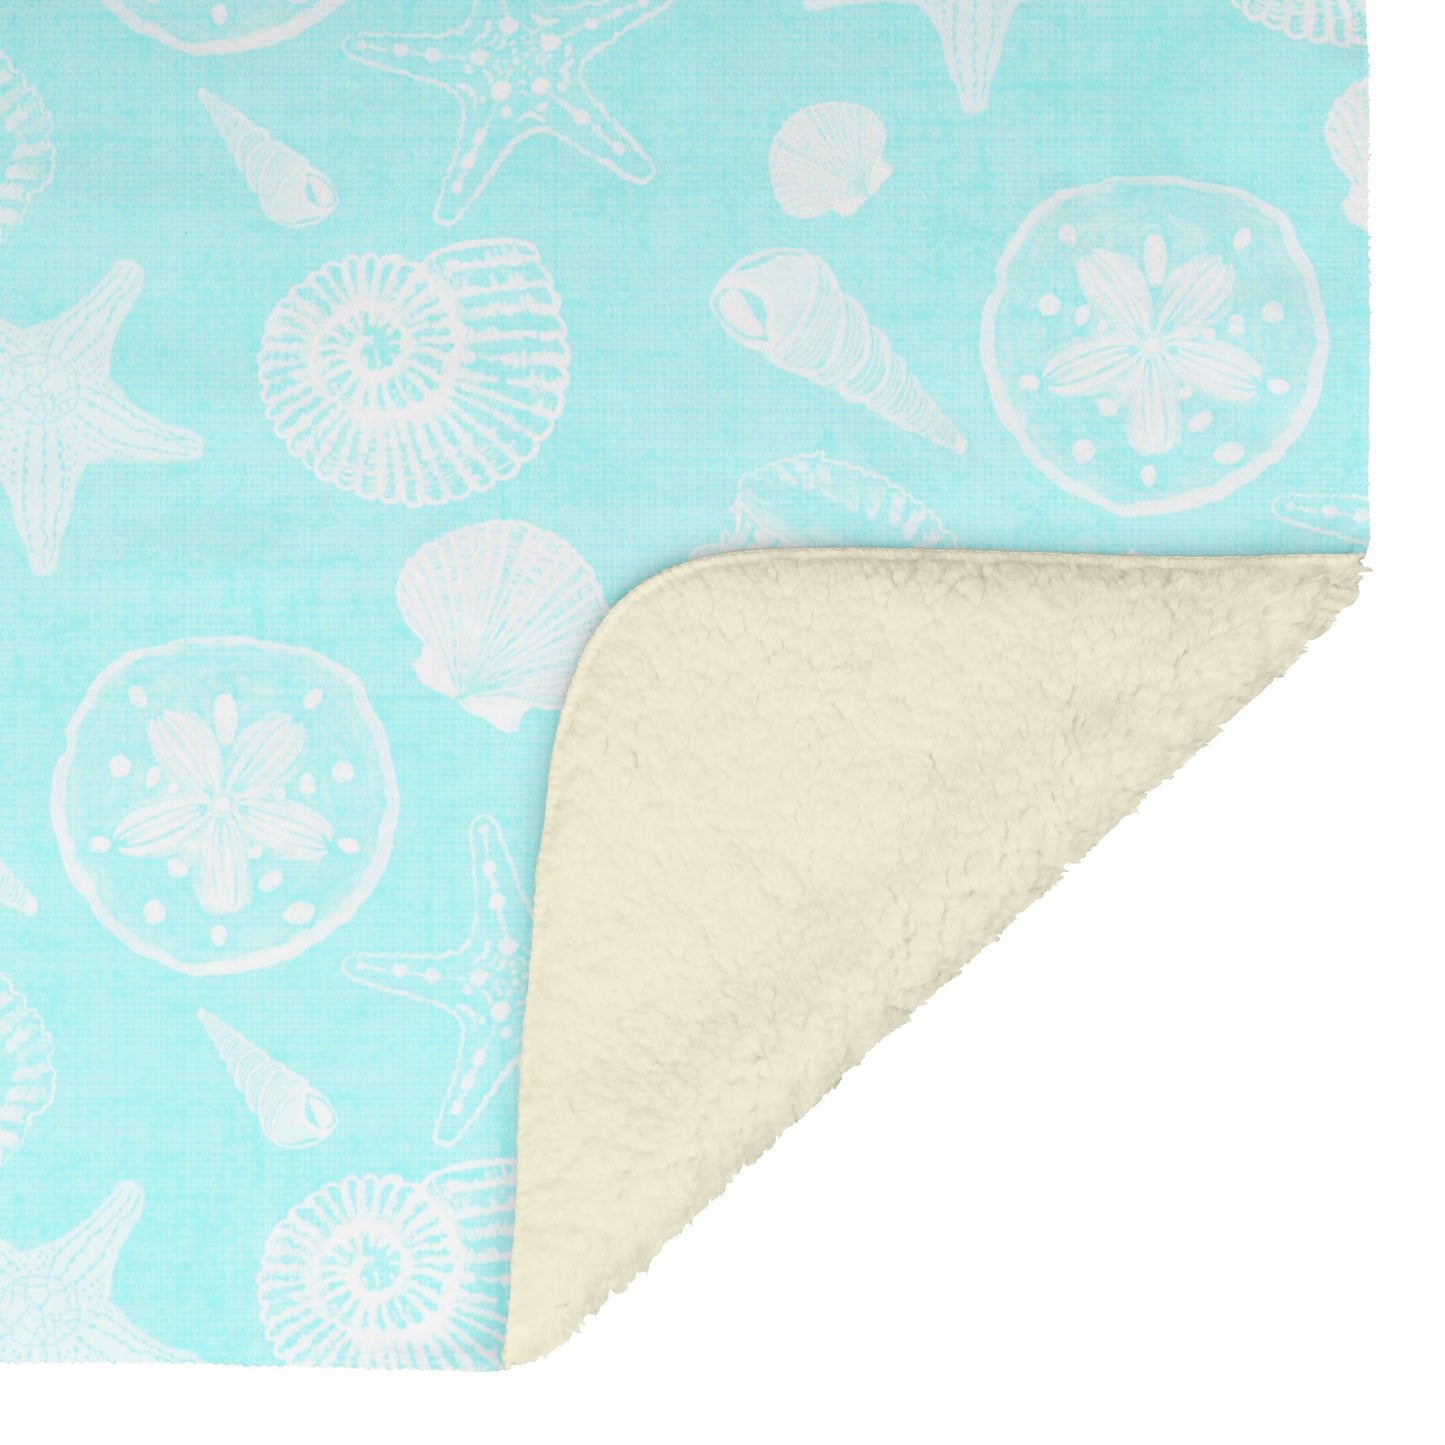 Seashell Sketches on Coastal Blue Linen Texture Background, Fleece Blanket